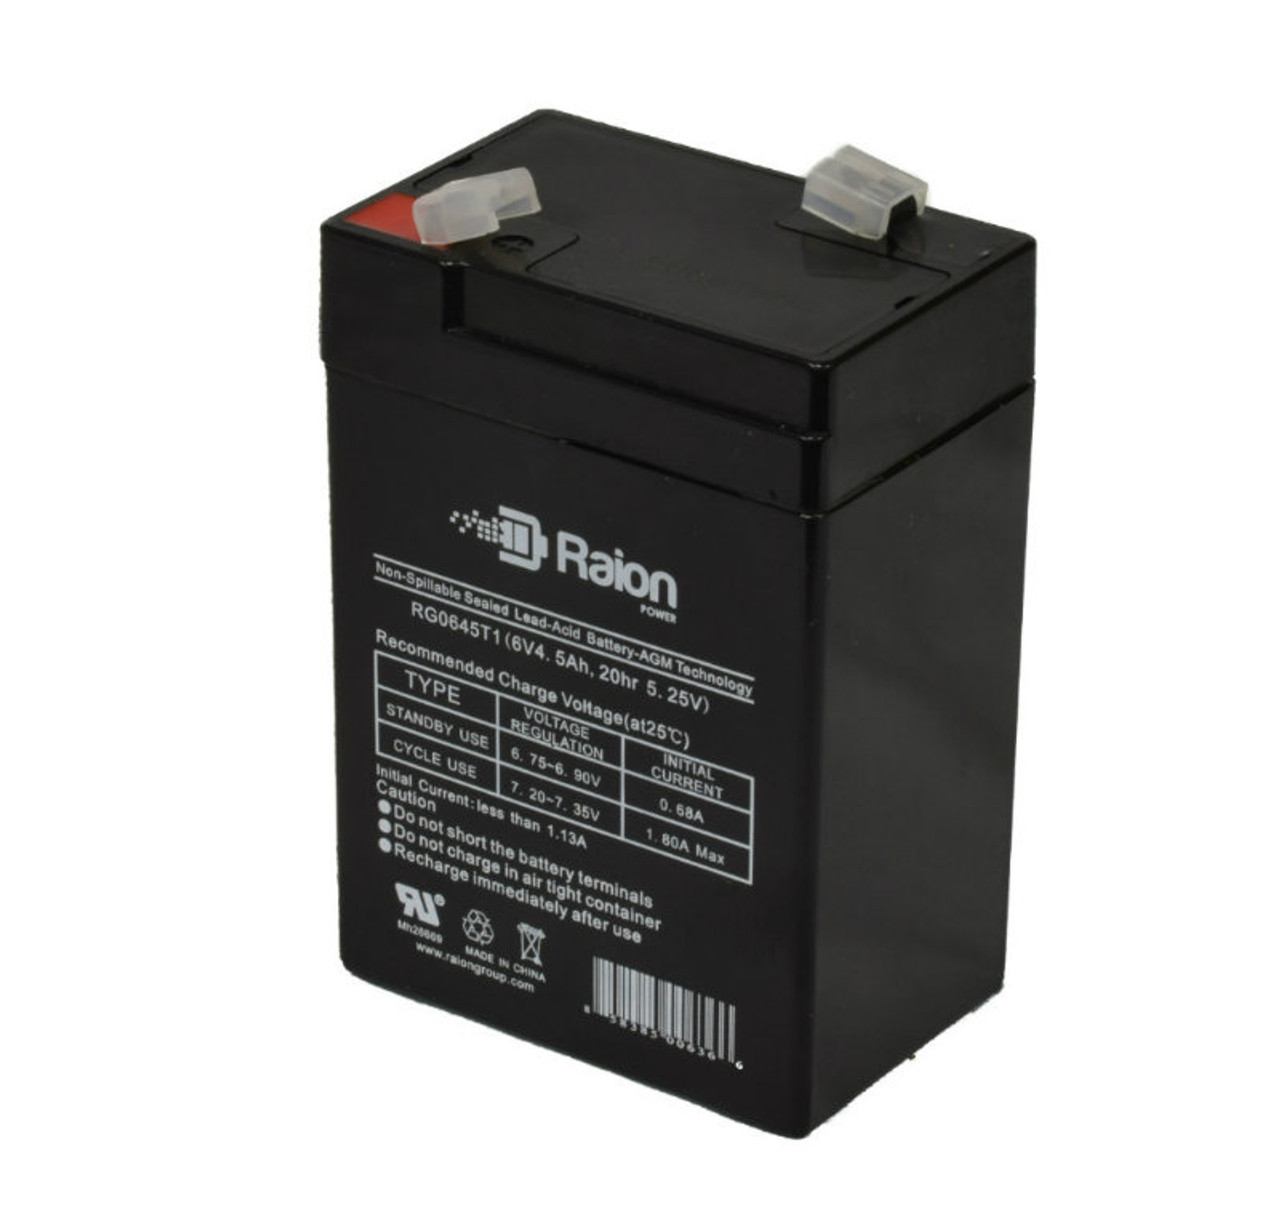 Raion Power RG0645T1 6V 4.5Ah Replacement Battery Cartridge for SunStone Power SPT6-4.5